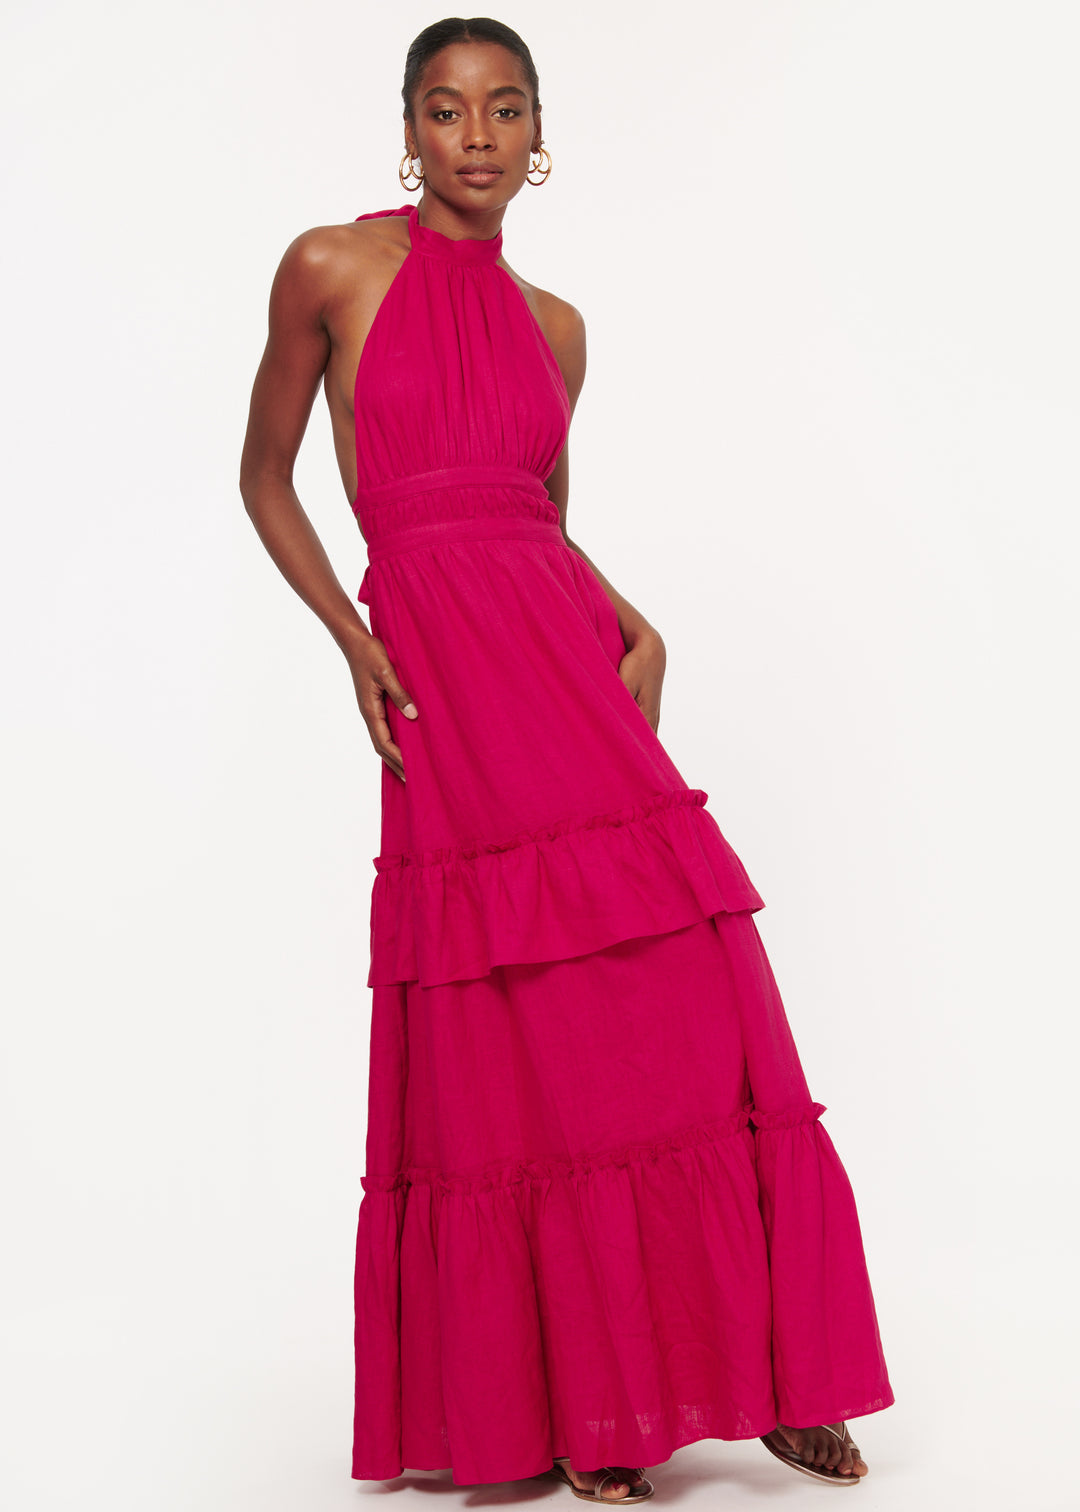 Cami NYC - Raeann Dress in Raspberry